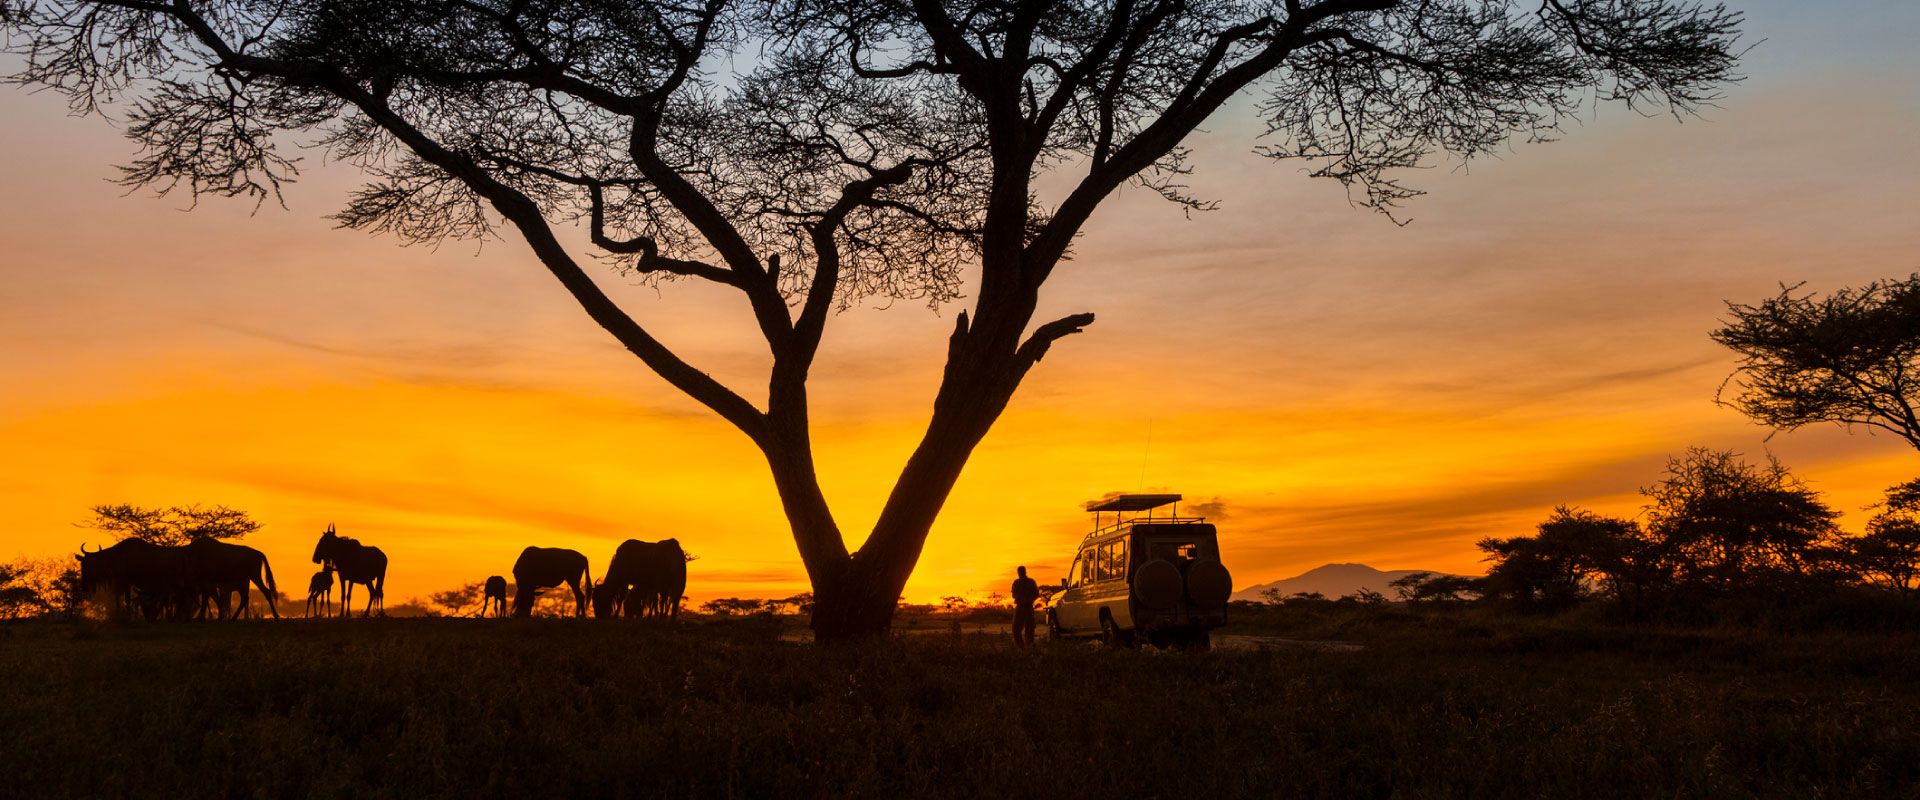 Serengeti National Park tour in tanzania